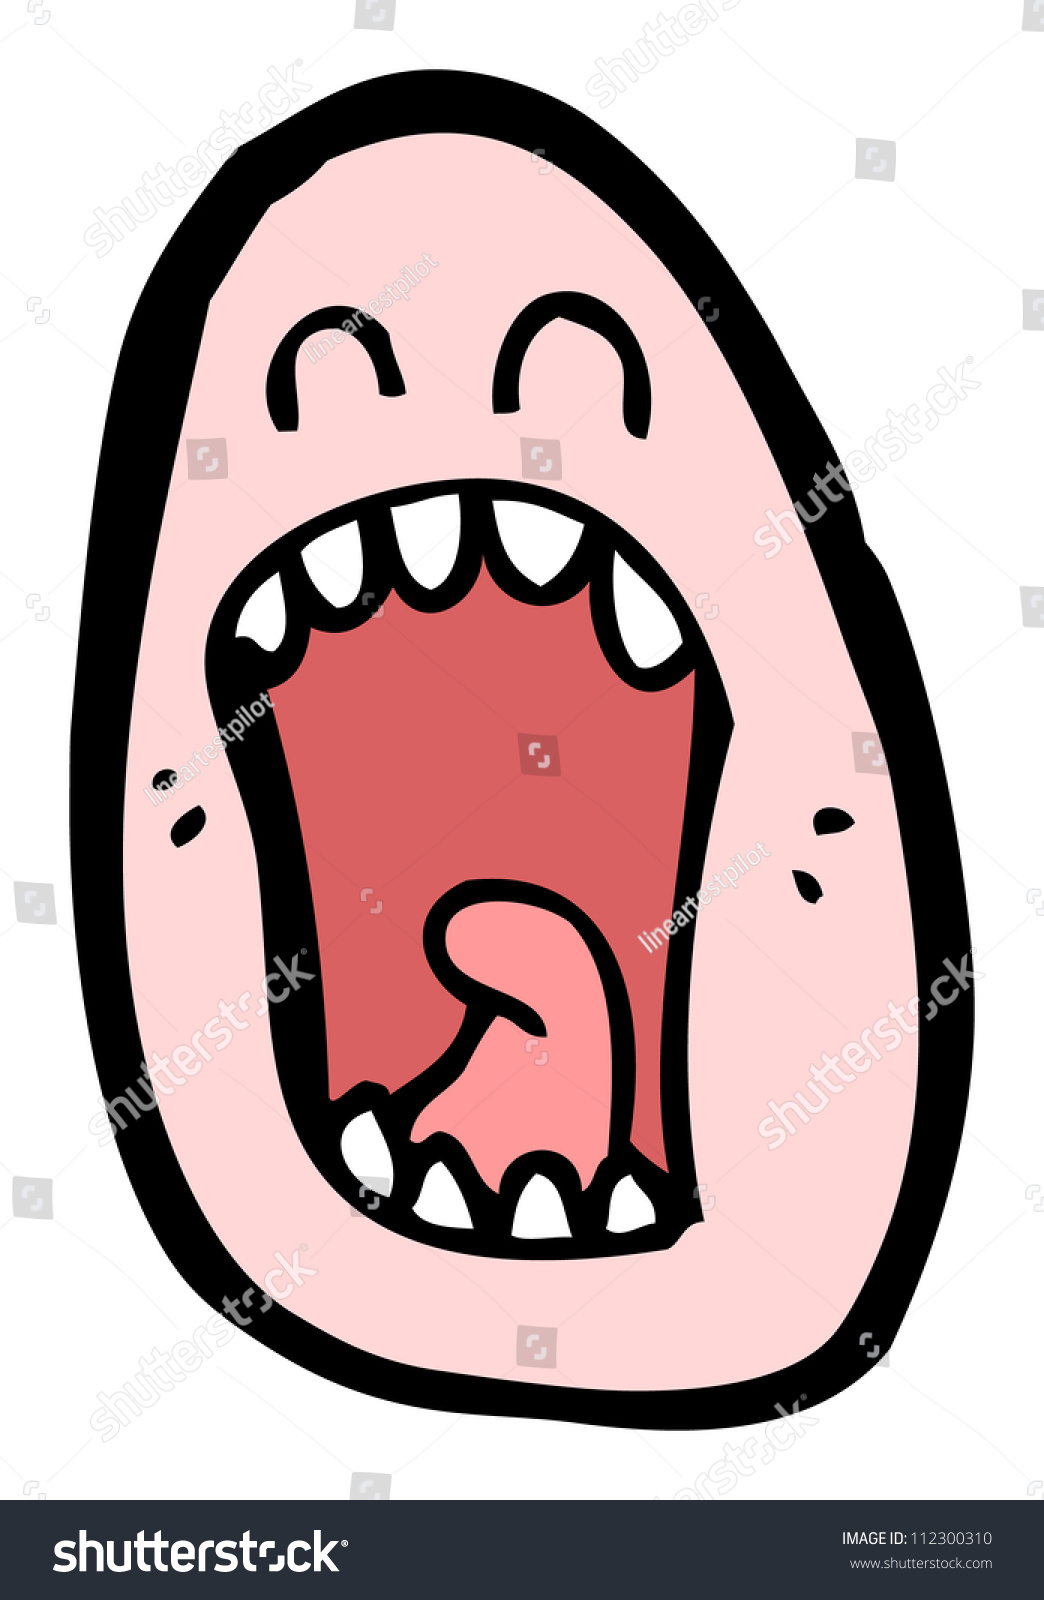 Cartoon Screaming Face Stock Photo 112300310 : Shutterstock